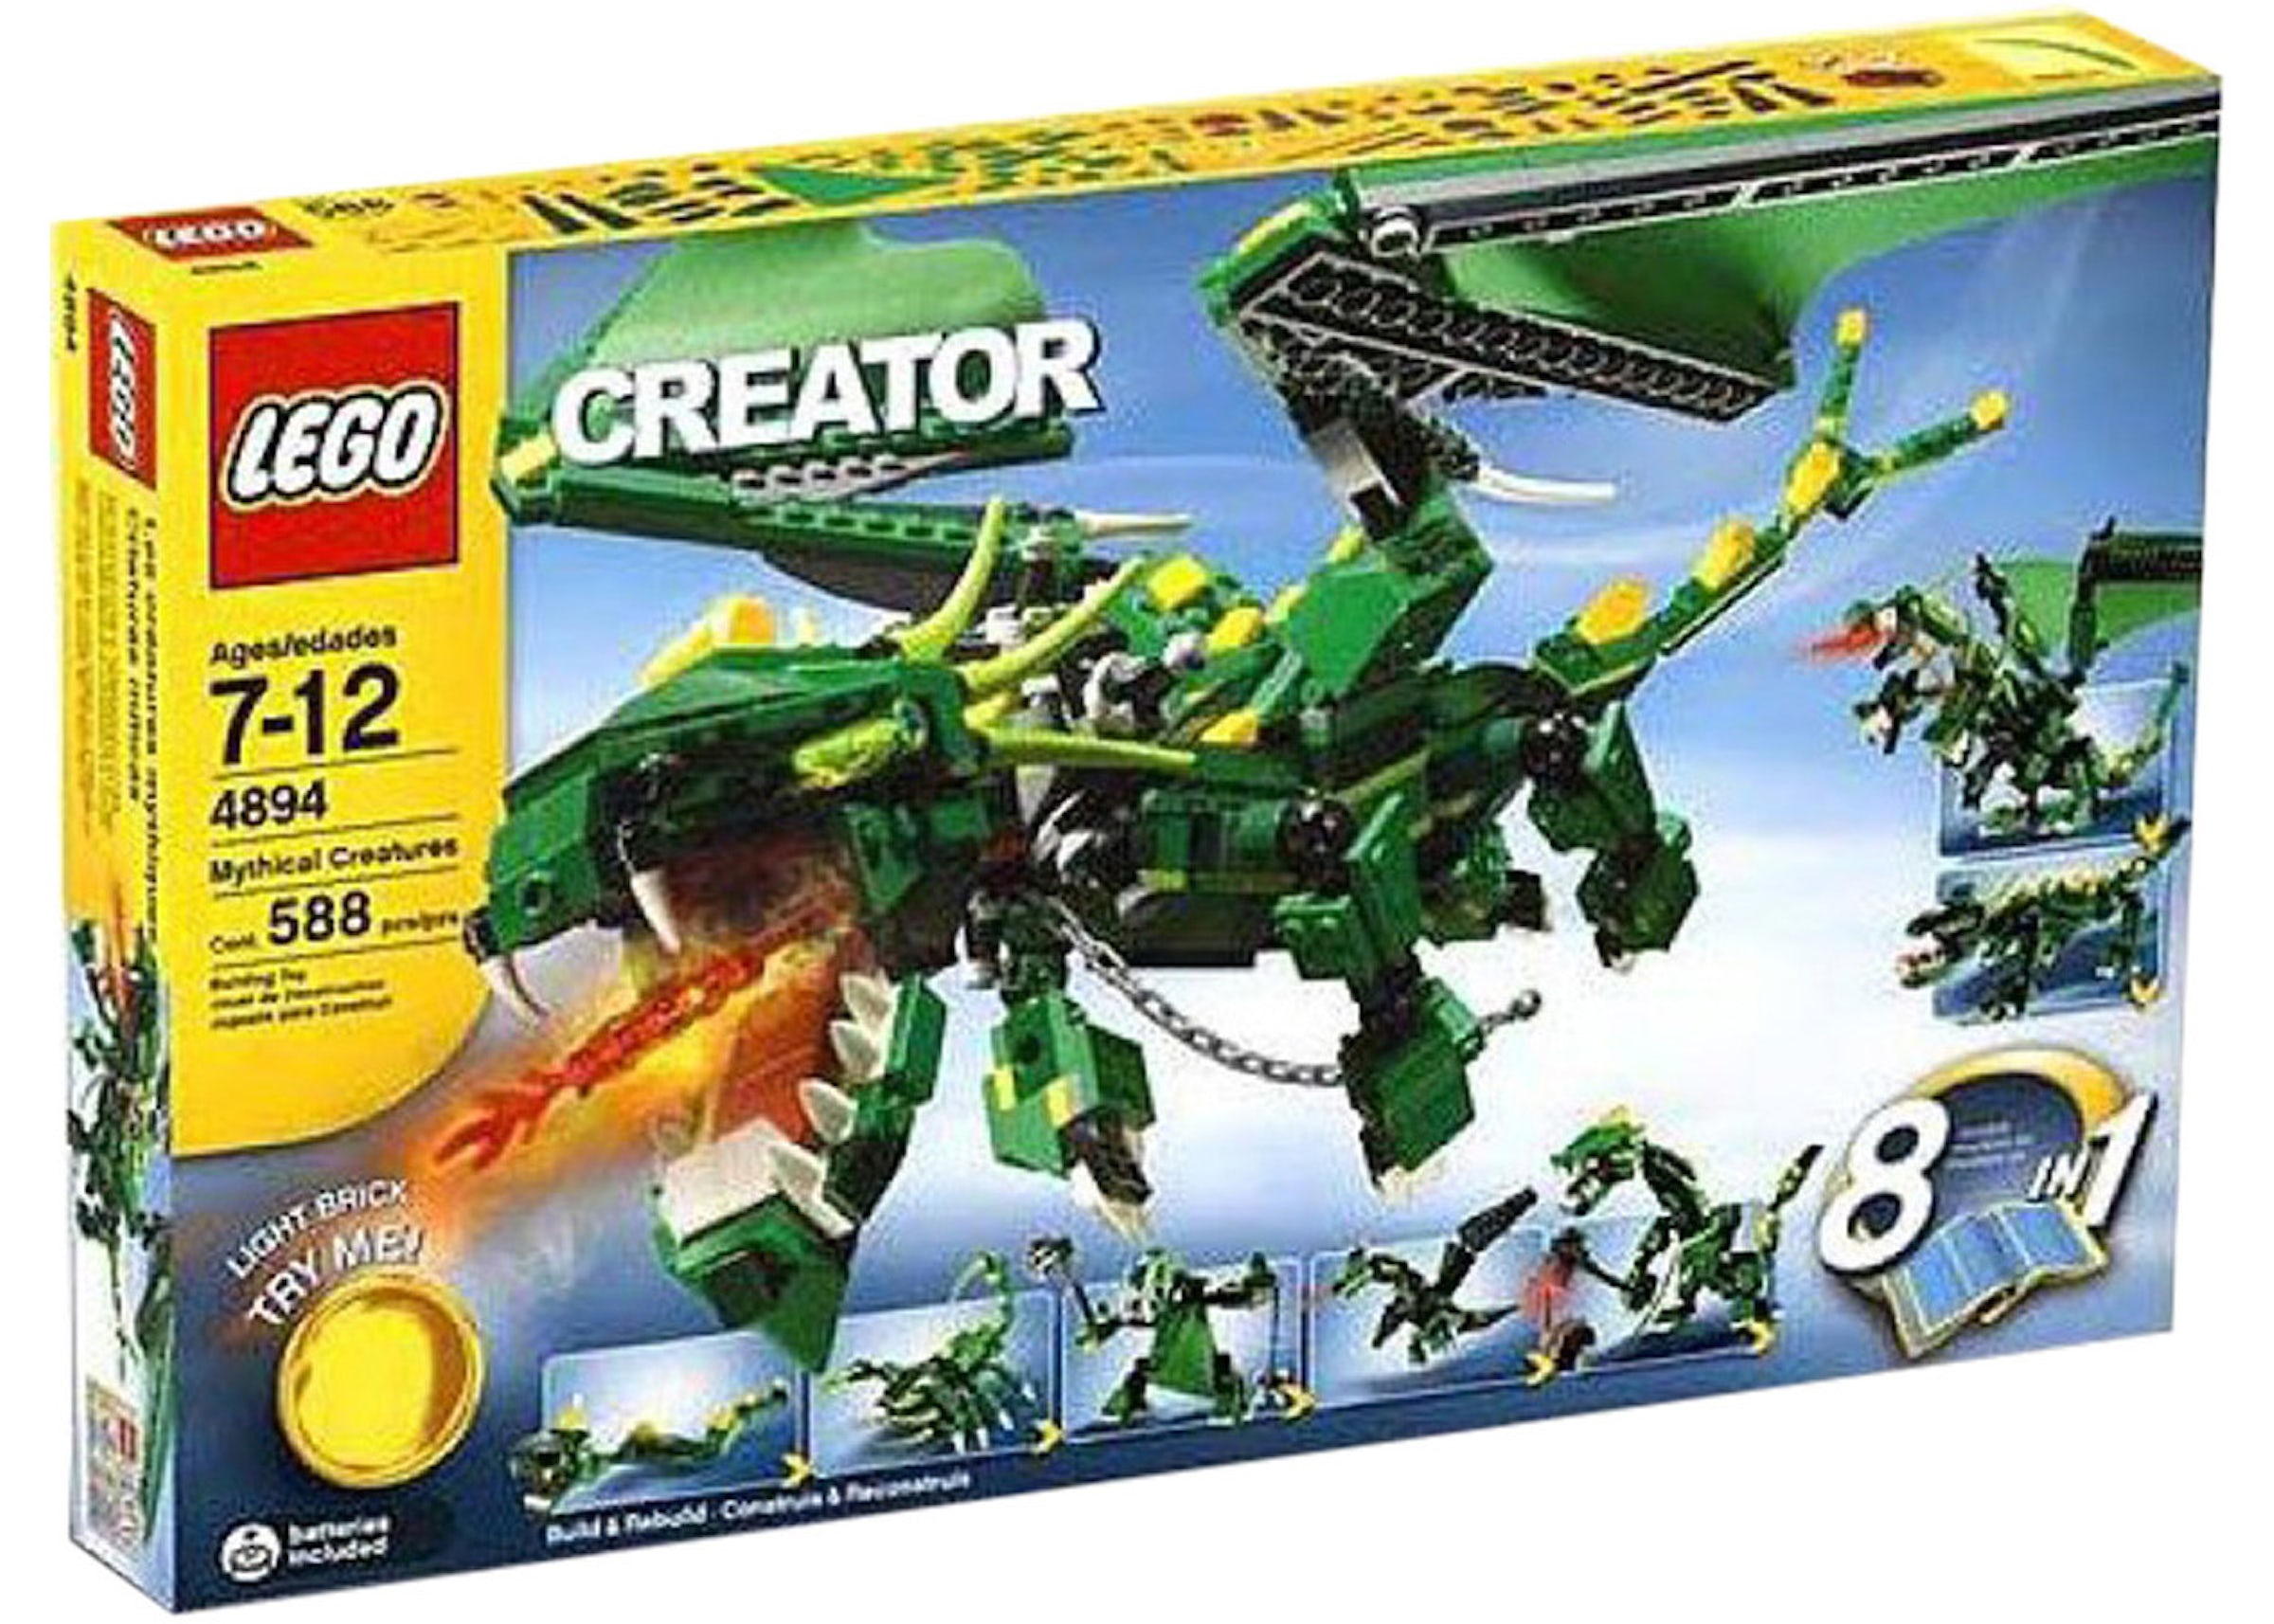 https://images.stockx.com/images/LEGO-Creator-Mythical-Creatures-Set-4894.jpg?fit=fill&bg=FFFFFF&w=1200&h=857&fm=jpg&auto=compress&dpr=2&trim=color&updated_at=1647883706&q=60